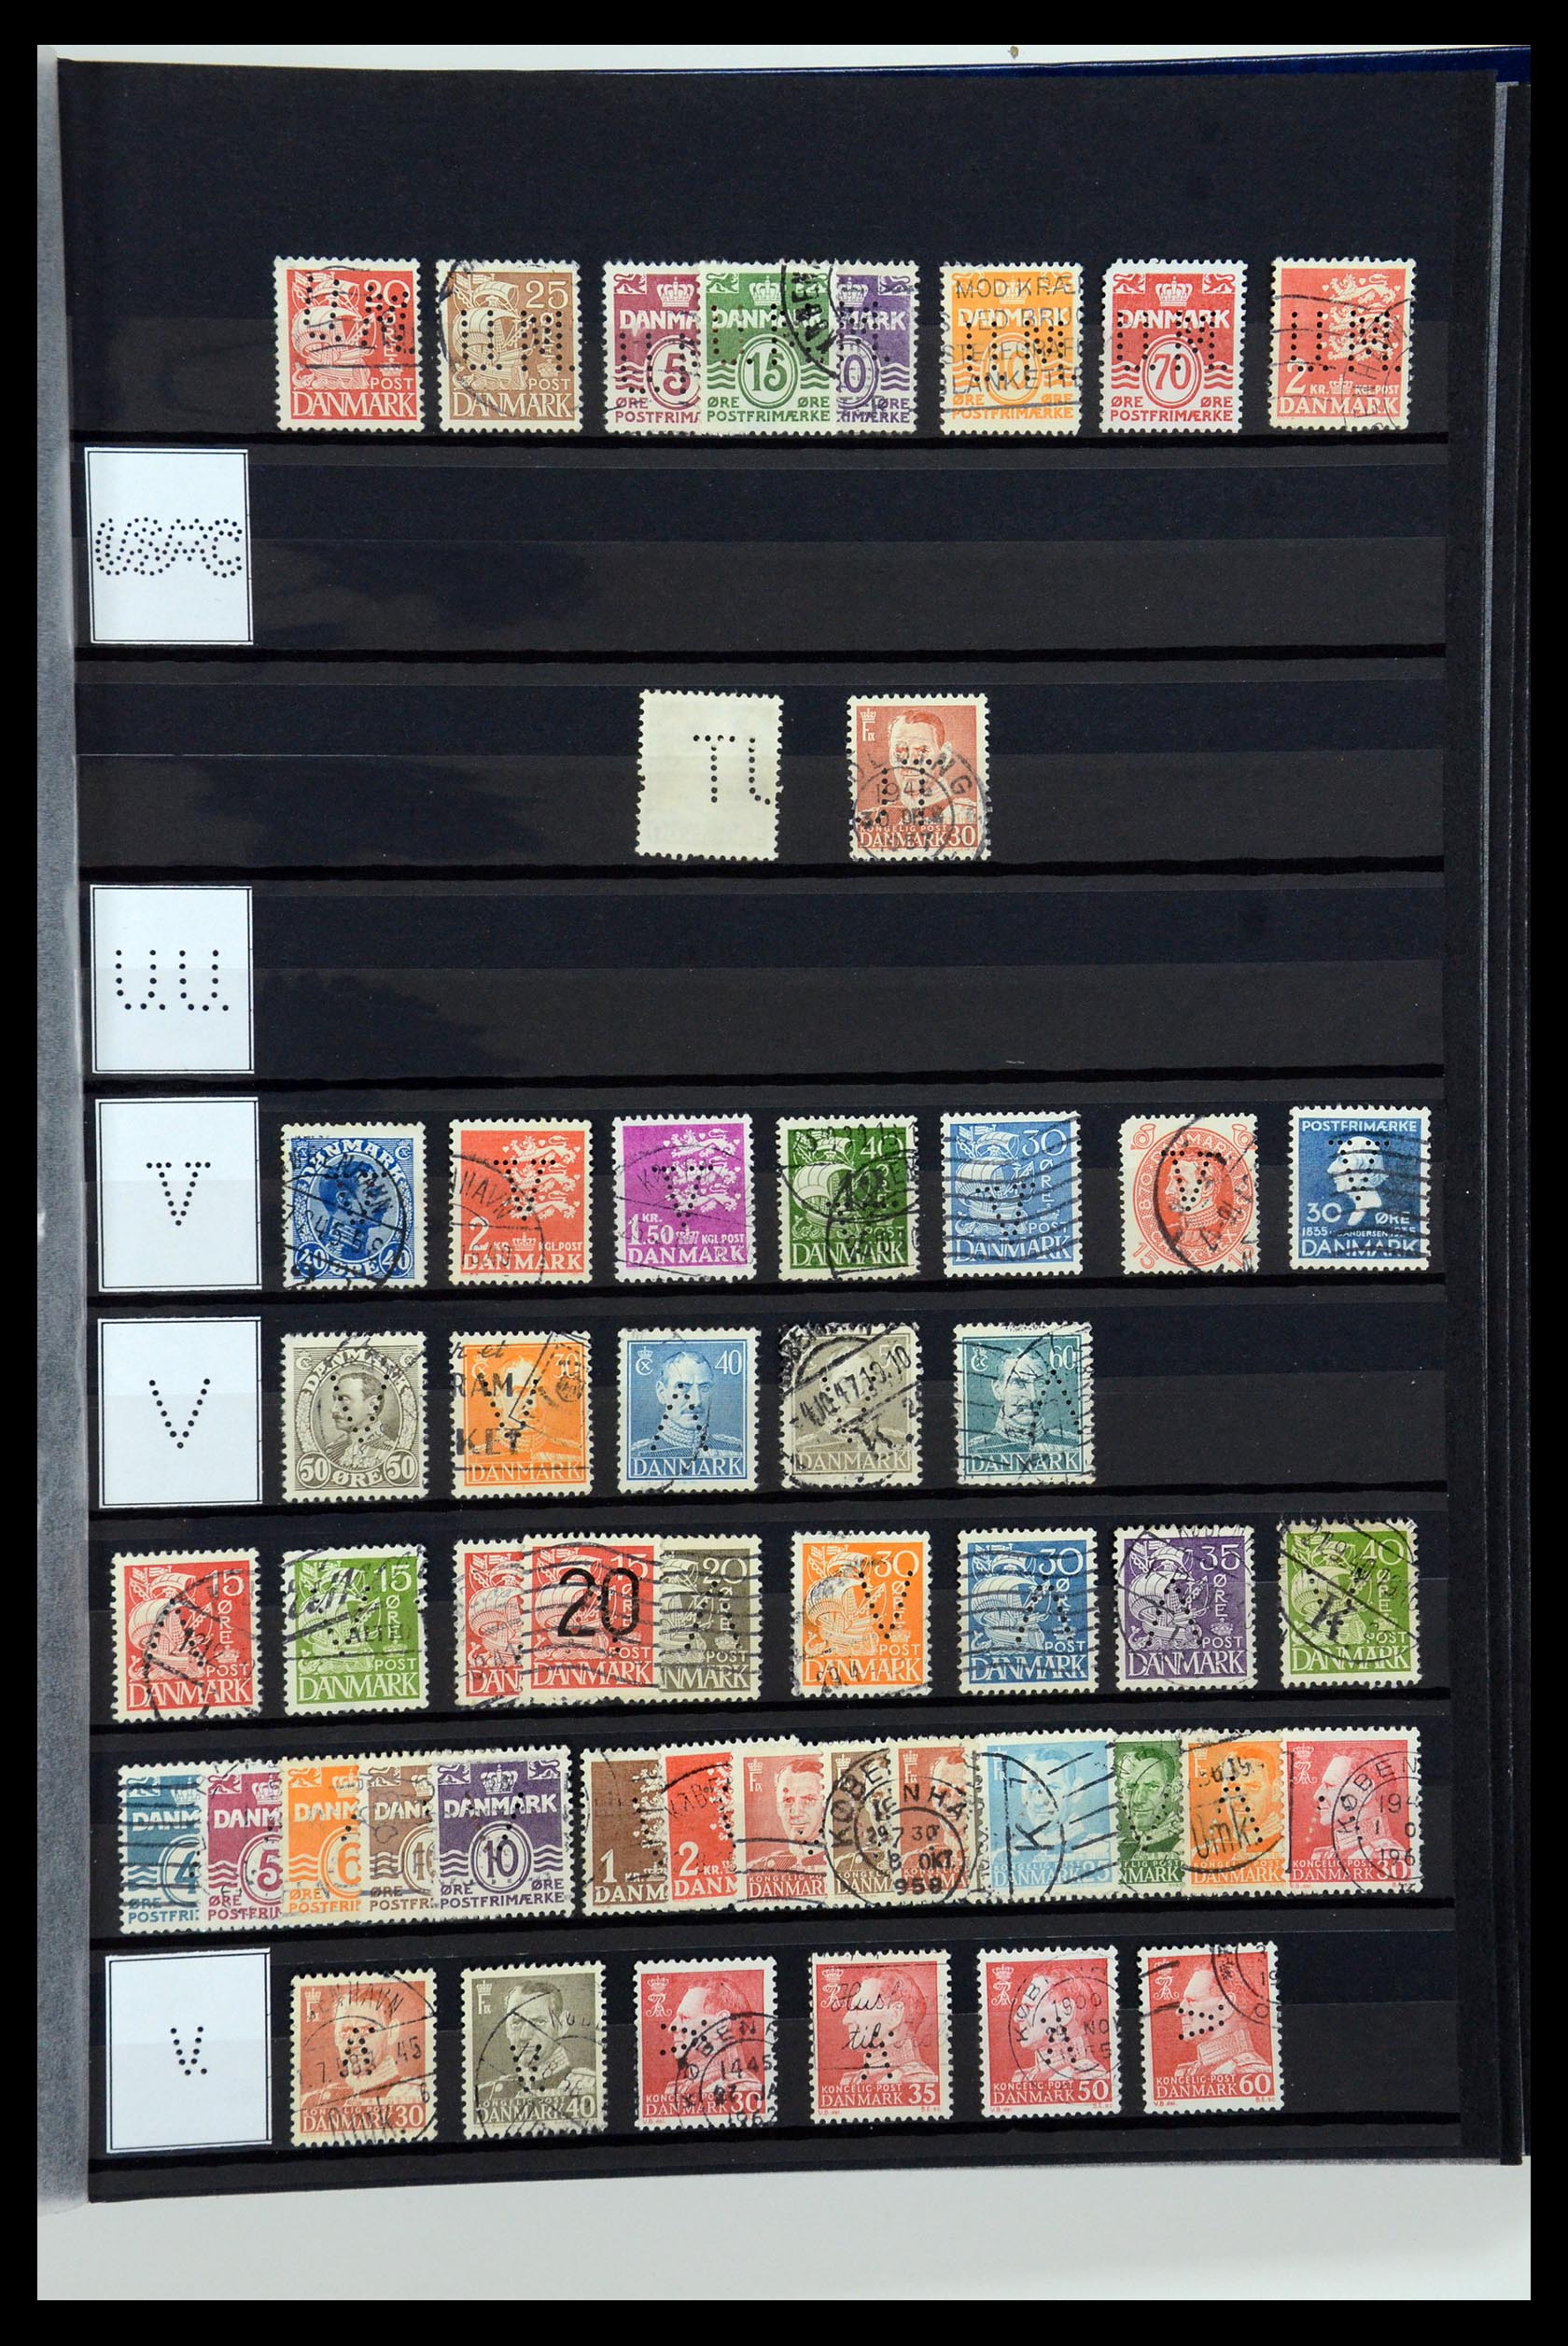 36396 219 - Stamp collection 36396 Denmark perfins.